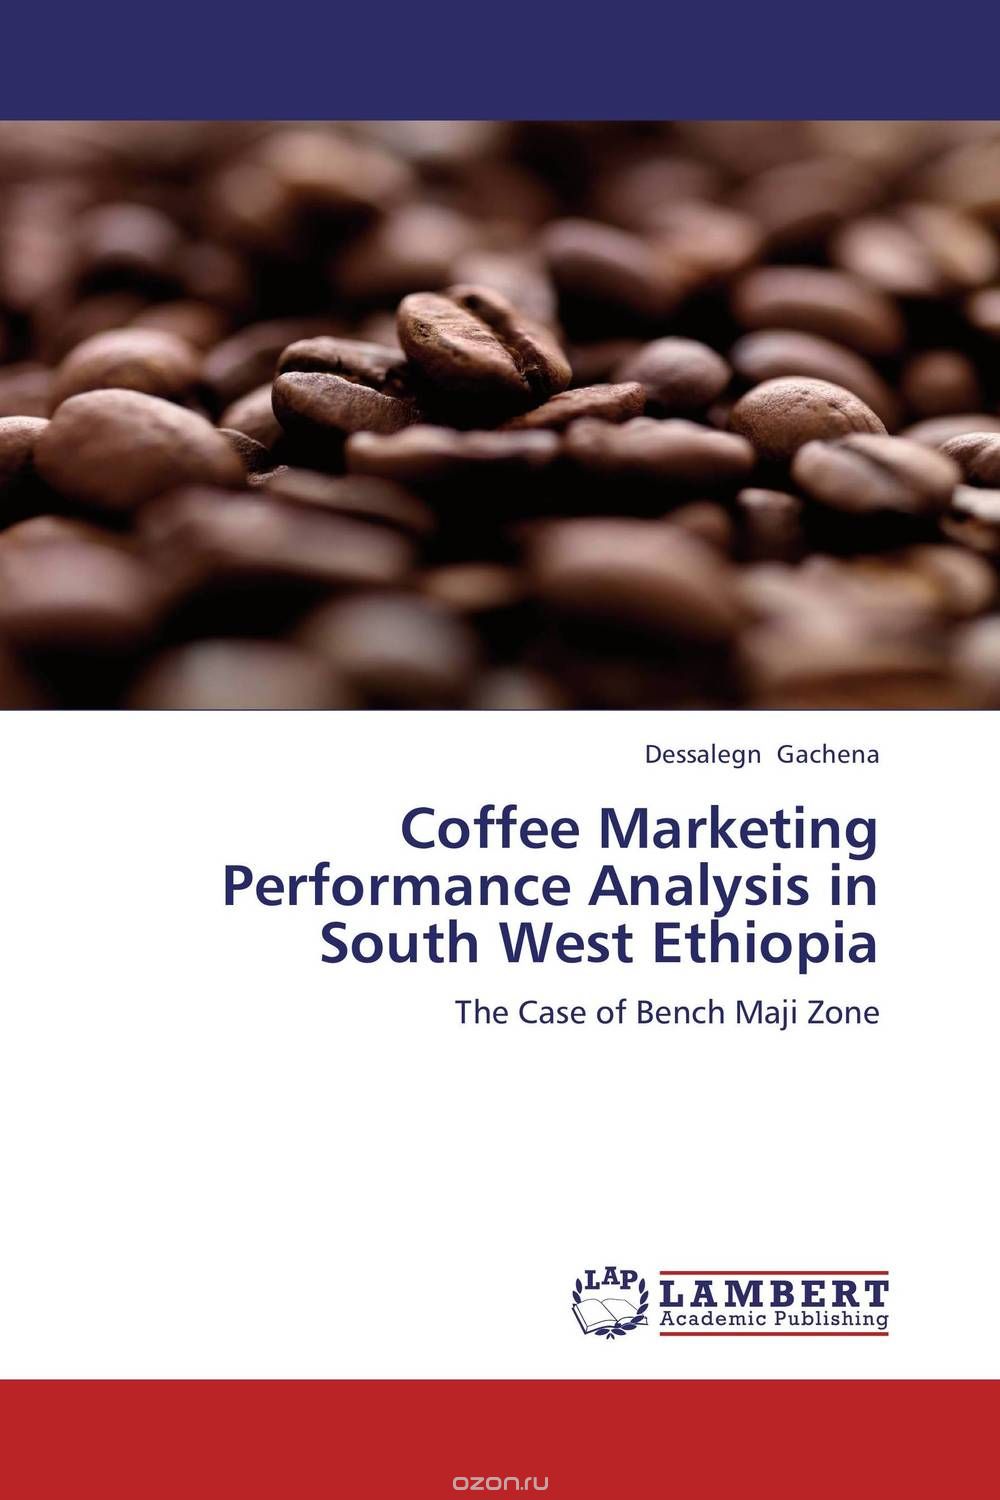 Скачать книгу "Coffee Marketing Performance Analysis in South West Ethiopia"